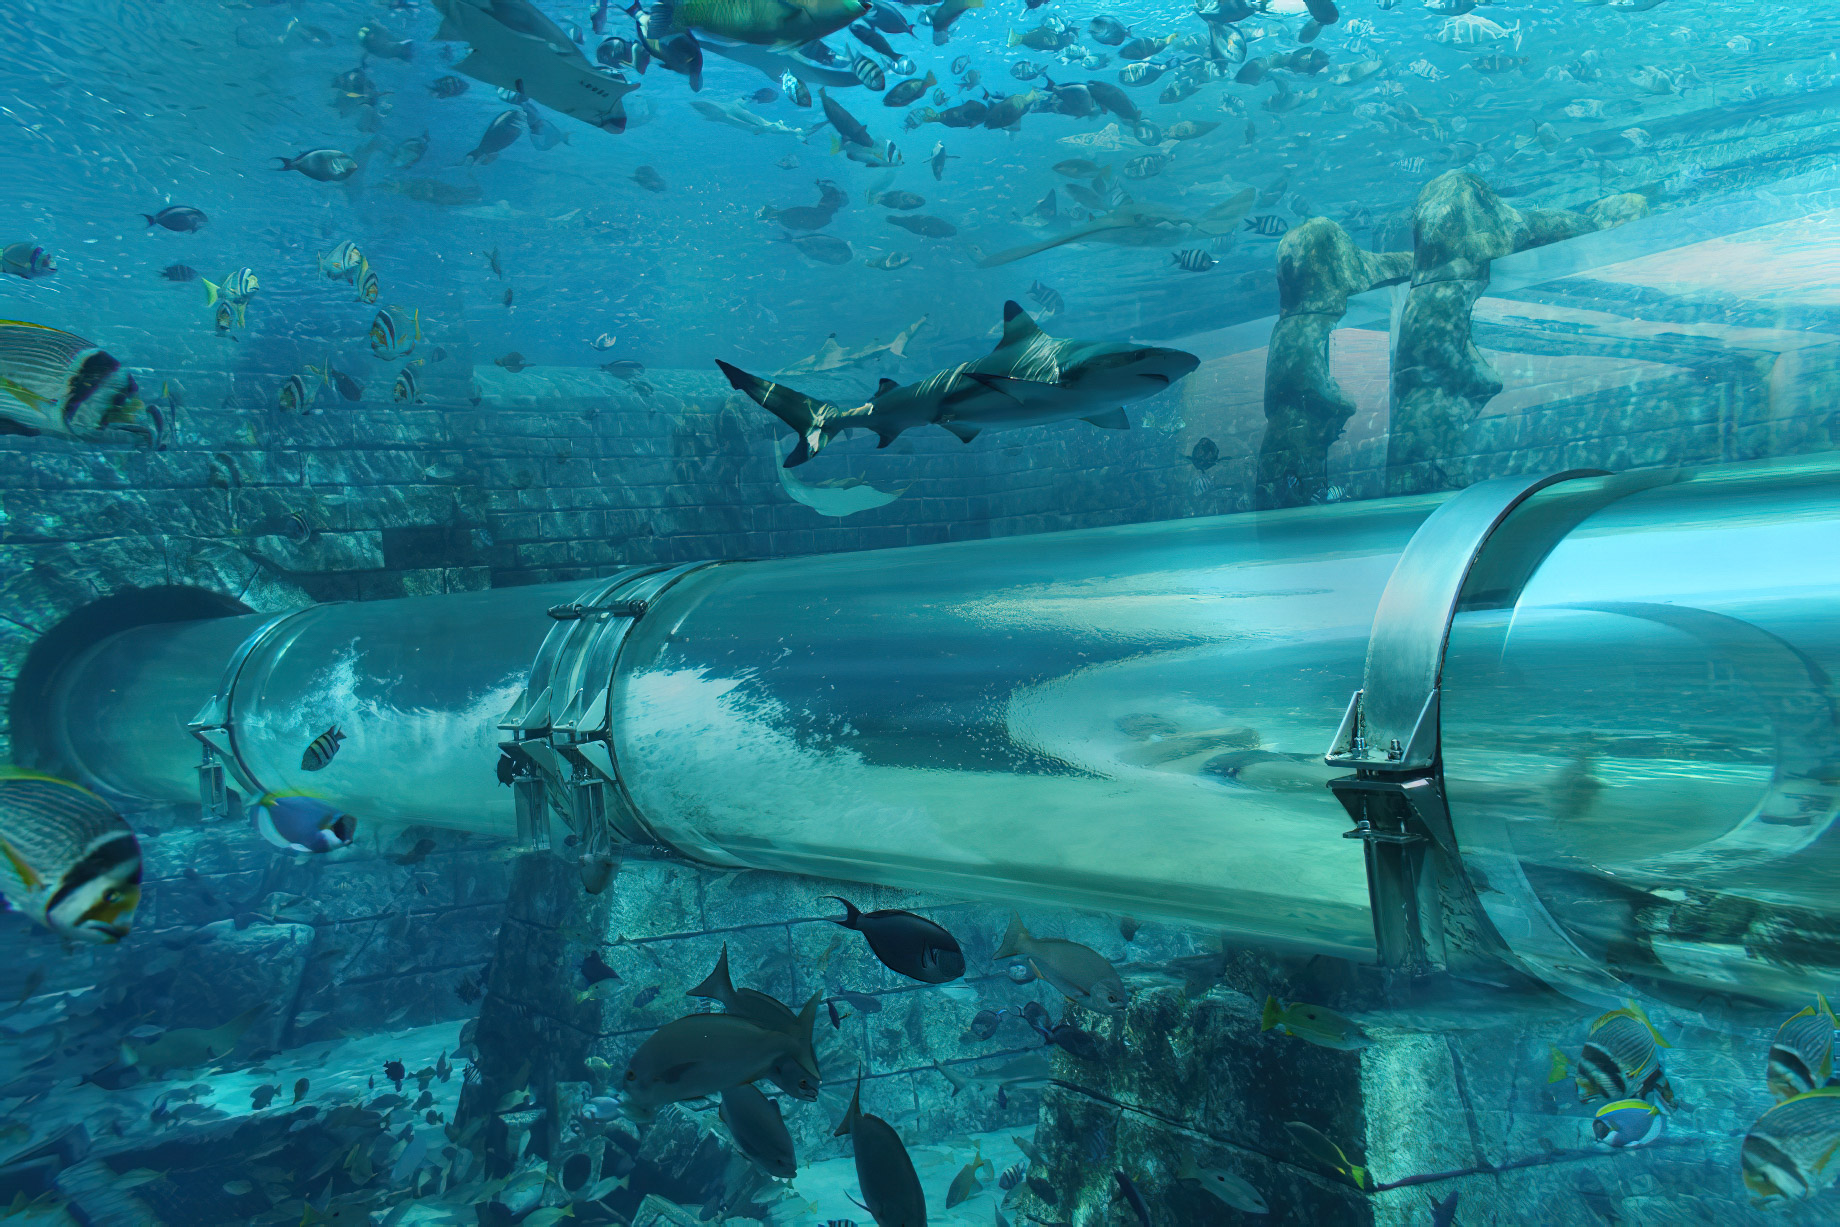 Atlantis The Palm Resort - Crescent Rd, Dubai, UAE - Tower of Neptune Water Slide Underwater